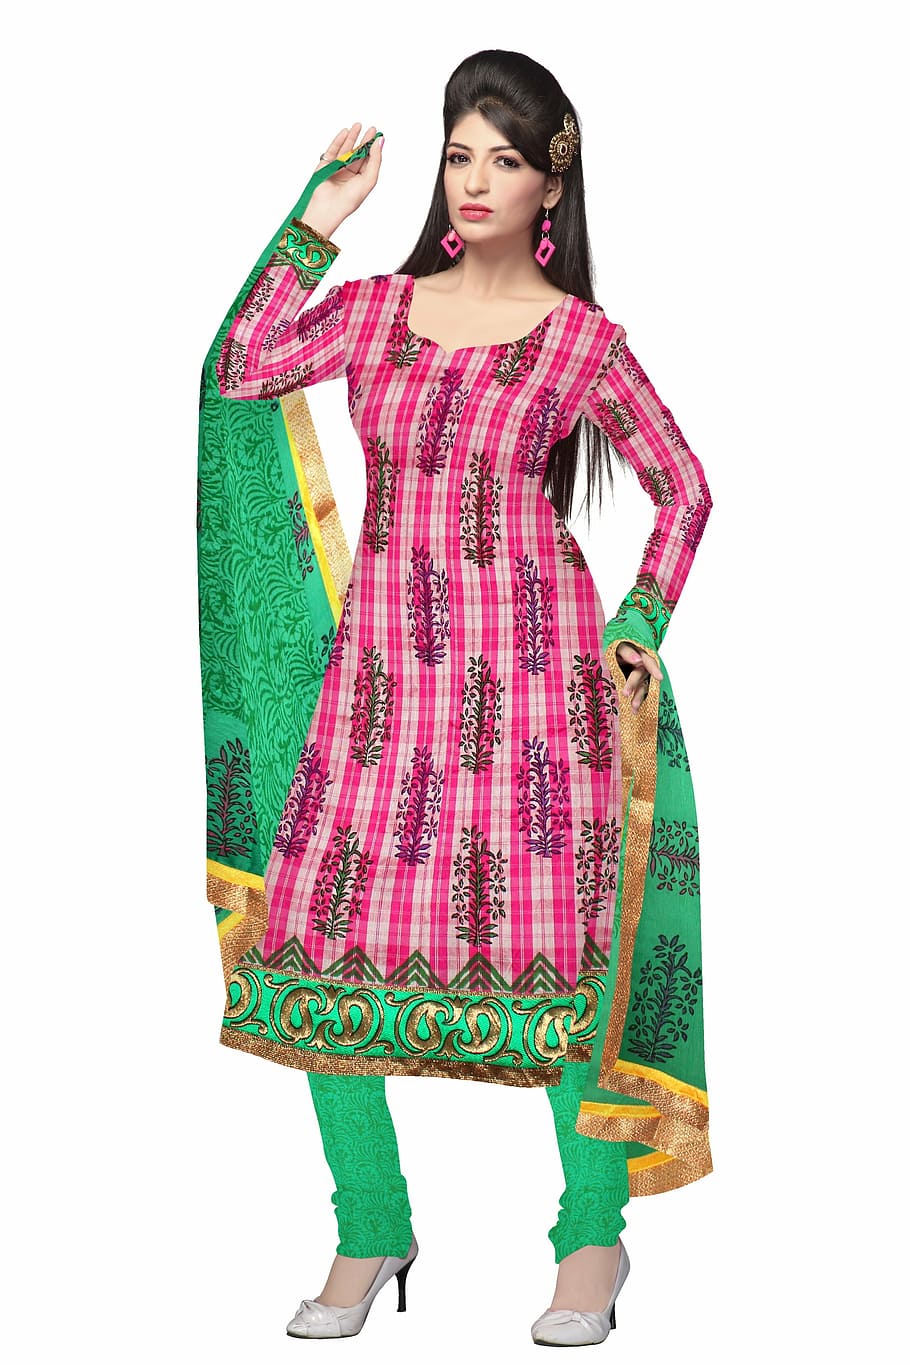 Hd Wallpaper Saree Indian Ethnic Clothing Fashion Silk Dress Woman Wallpaper Flare